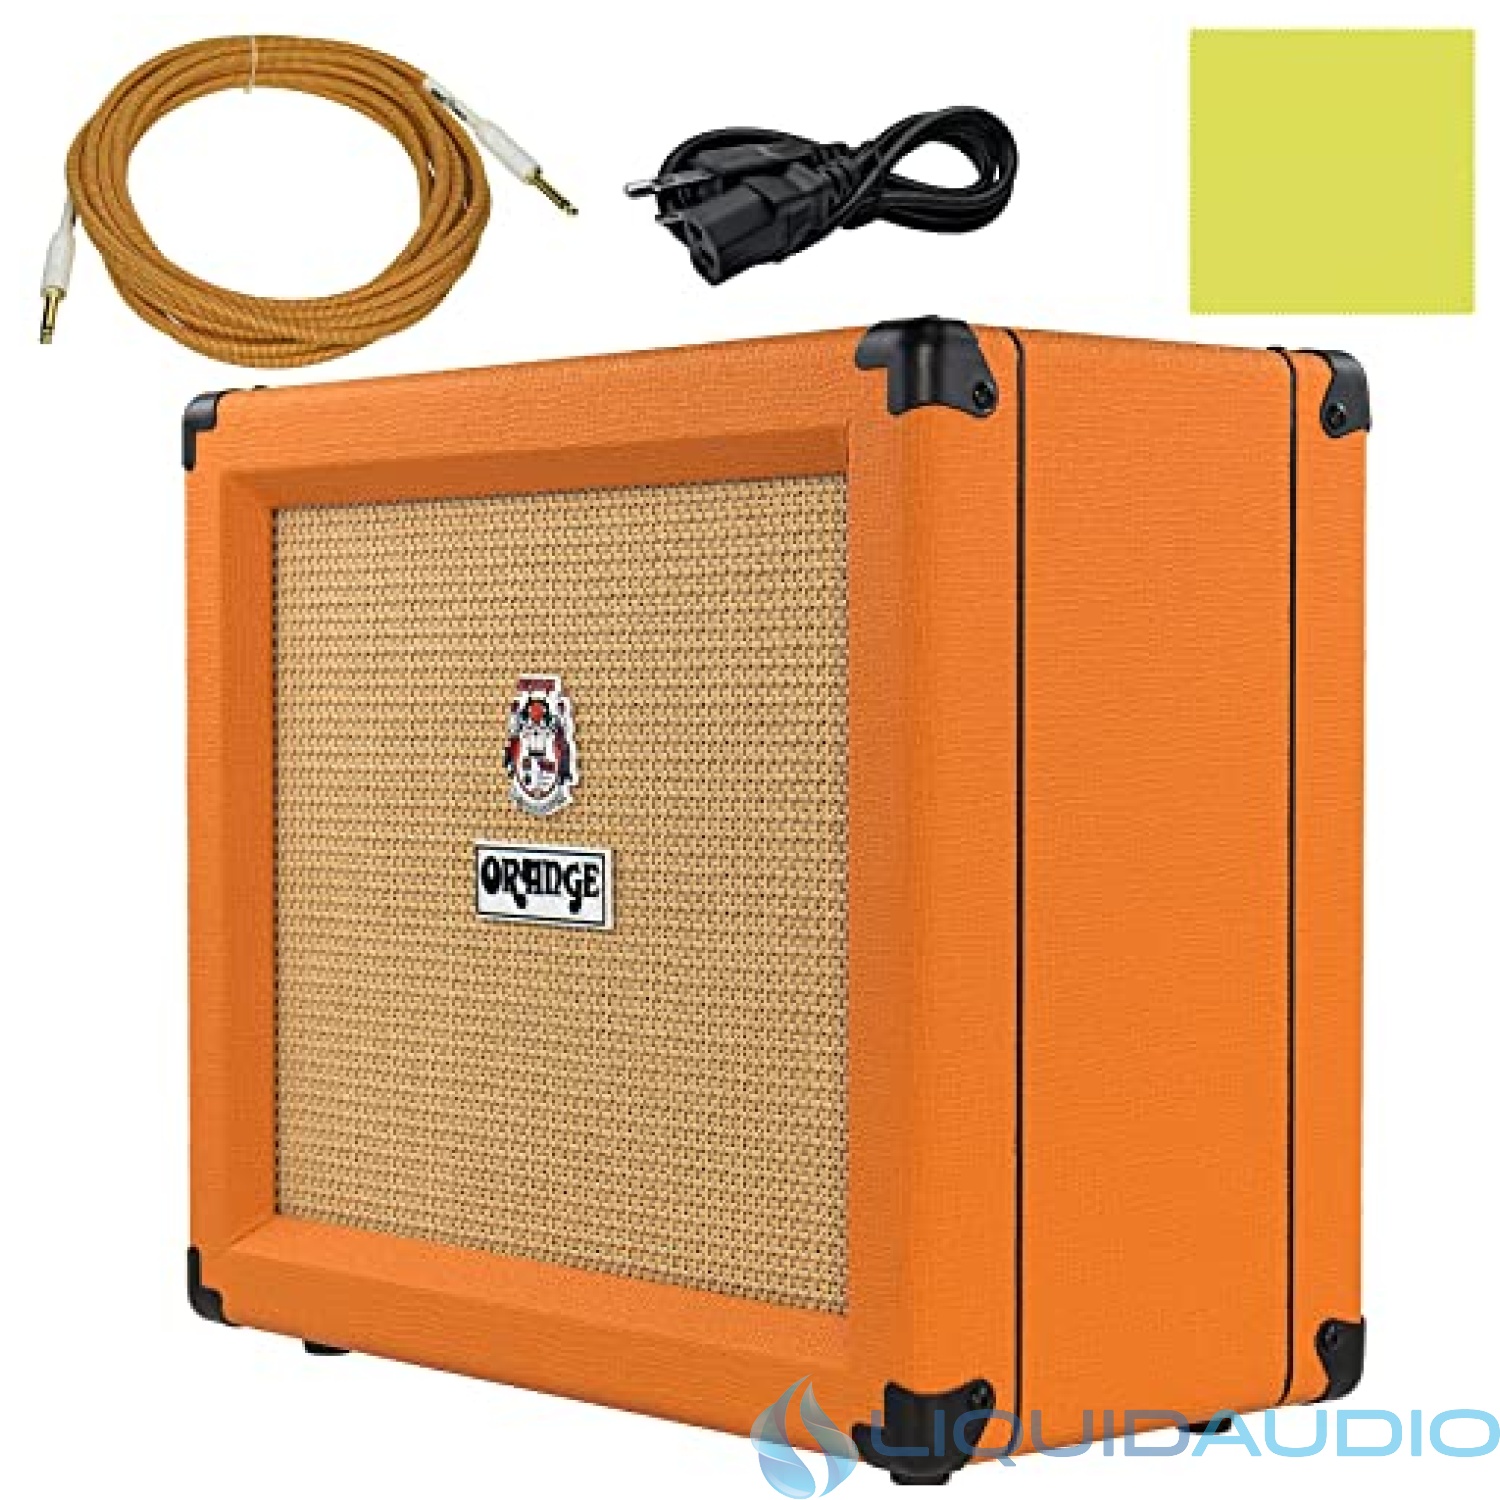 Orange Crush 20RT Guitar Combo Amplifier Bundle with Orange Woven Instrument Cable and Liquid Audio Polishing Cloth